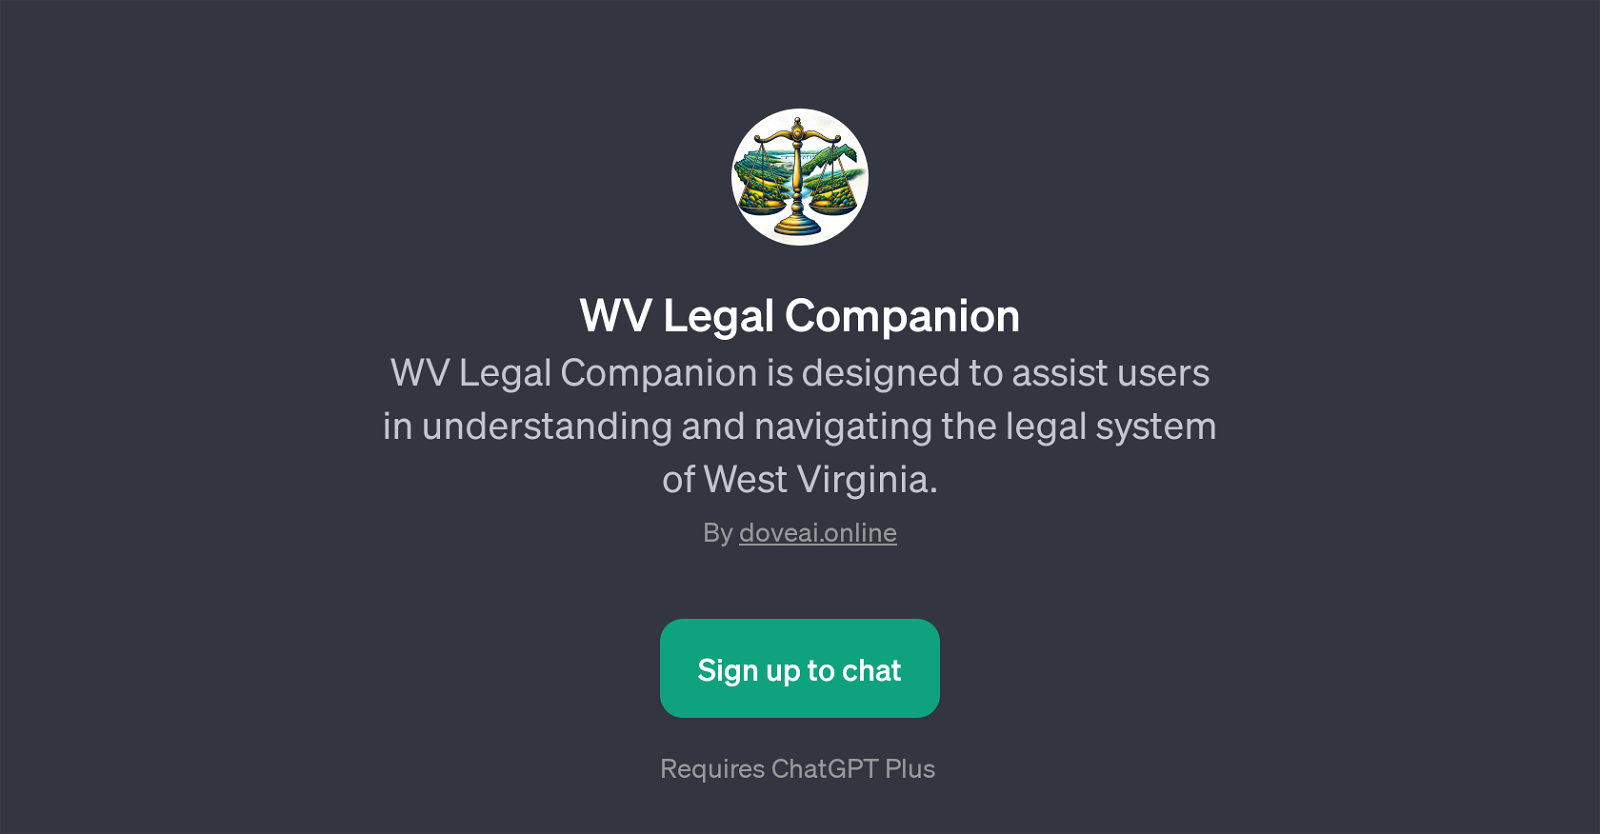 WV Legal Companion website